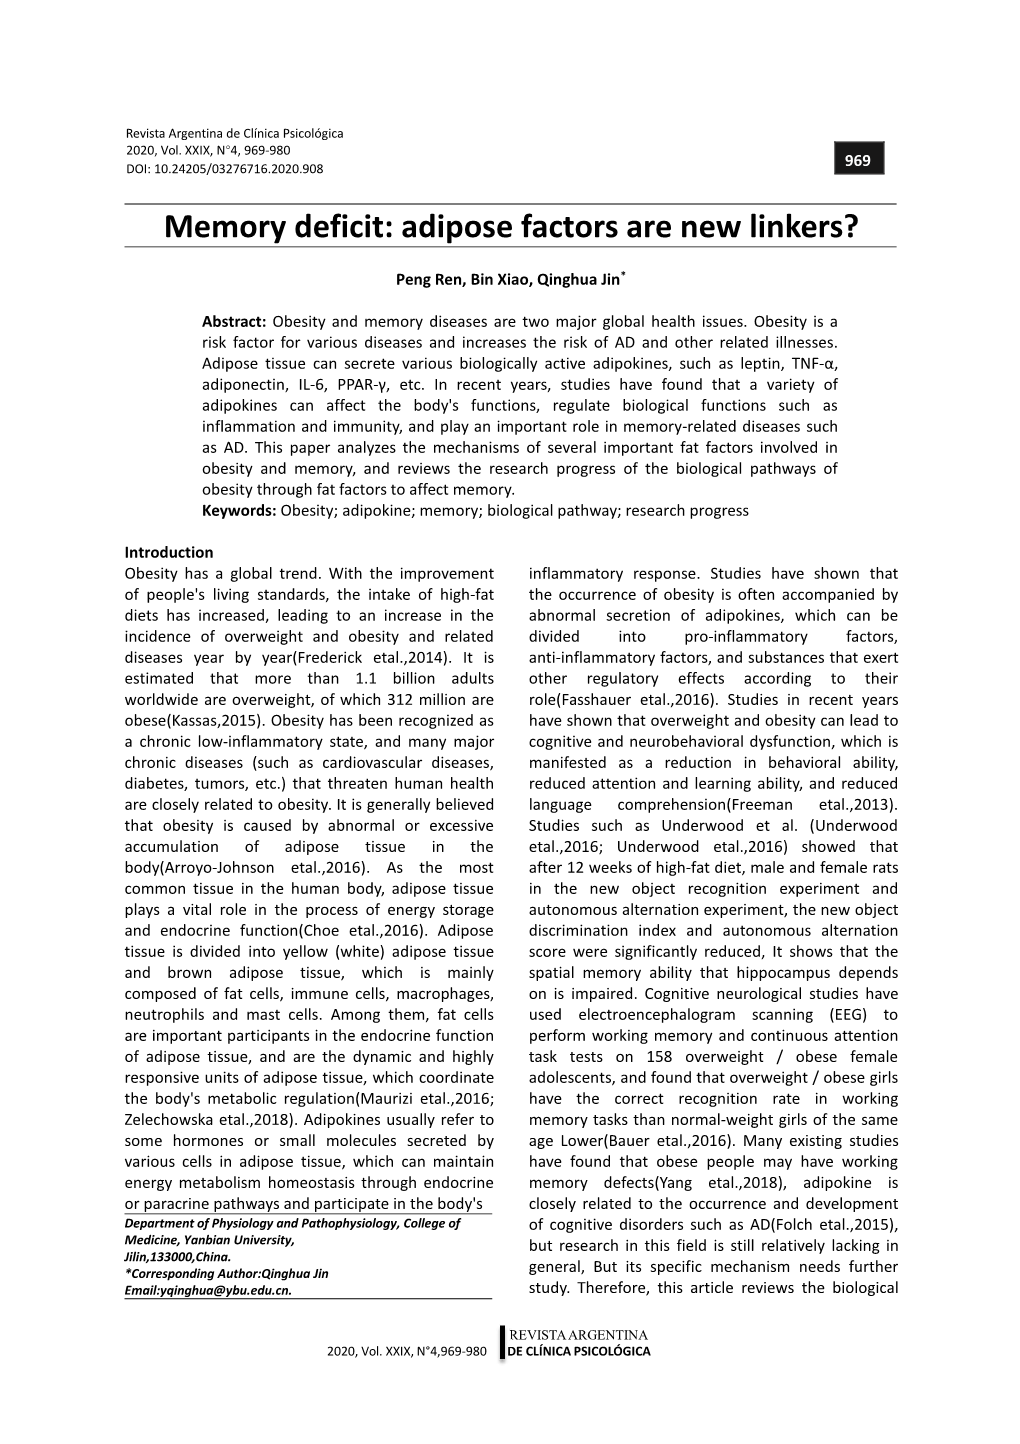 Memory Deficit: Adipose Factors Are New Linkers?